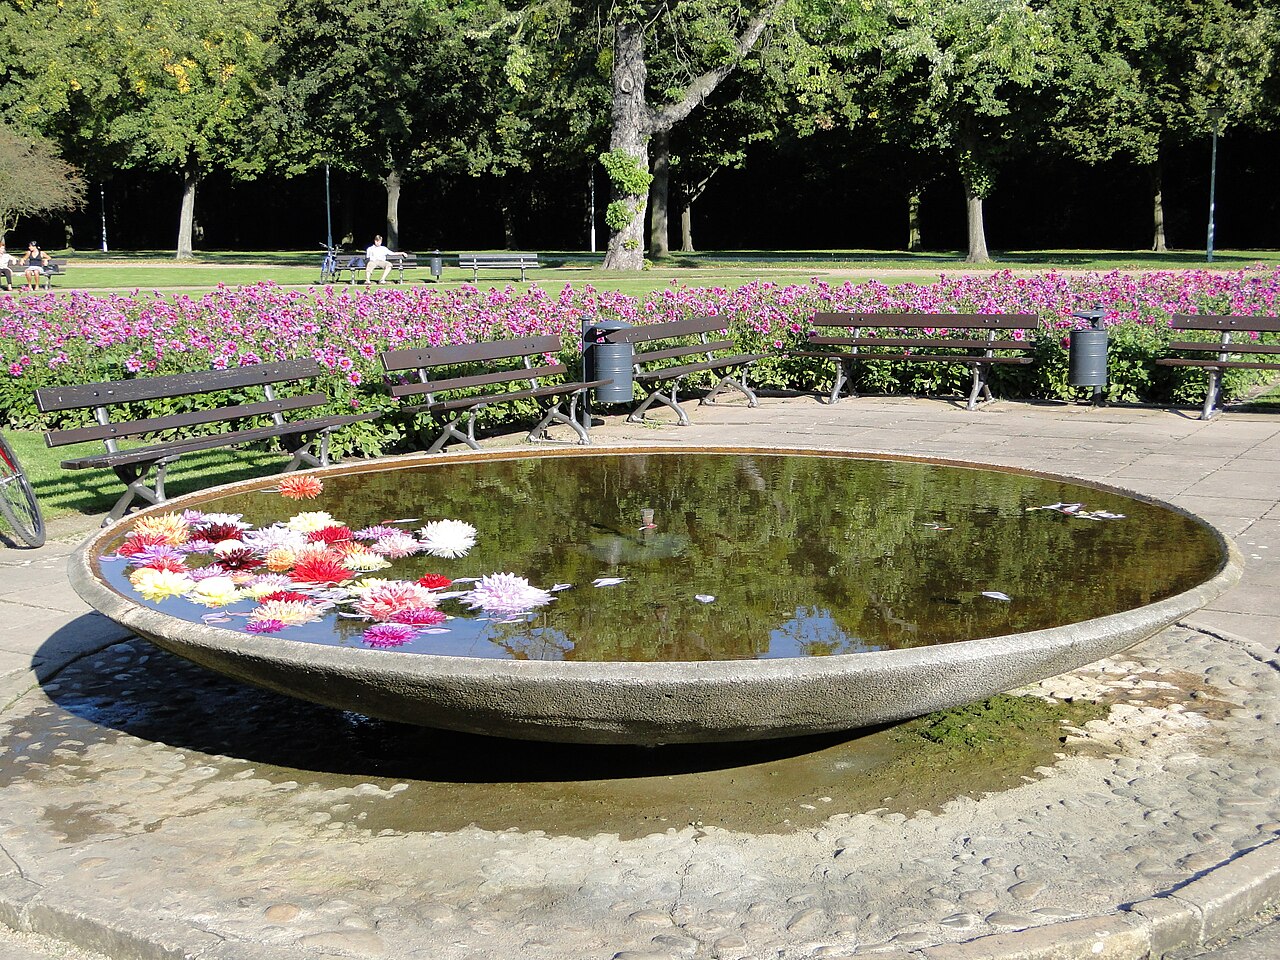 Datei:Brunnenschale Dahliengarten Großer Garten.JPG – Wikipedia